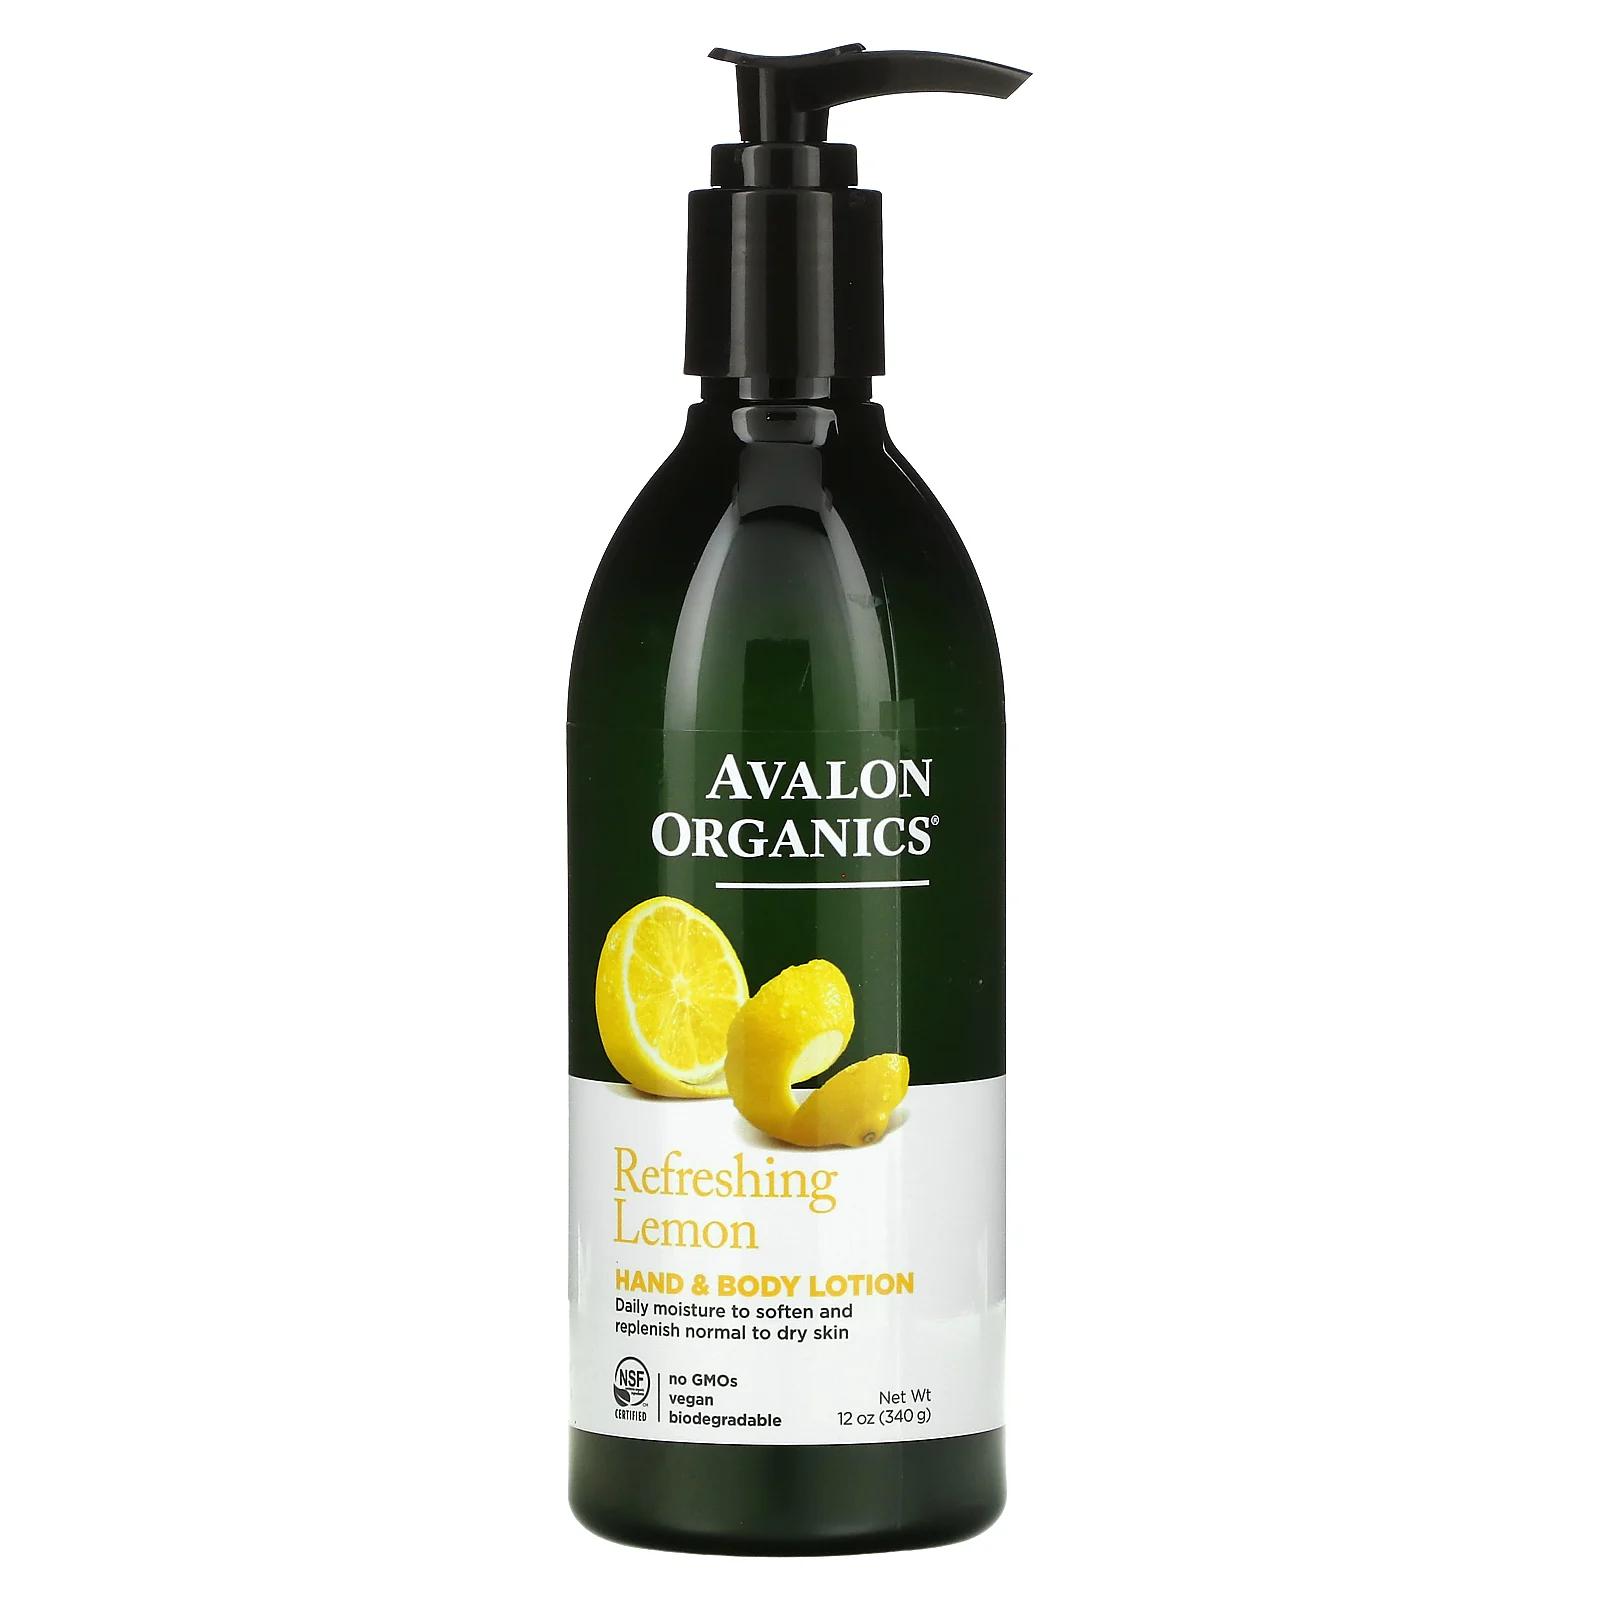 Avalon Organics Hand & Body Lotion Refreshing Lemon 12 oz (340 ml)